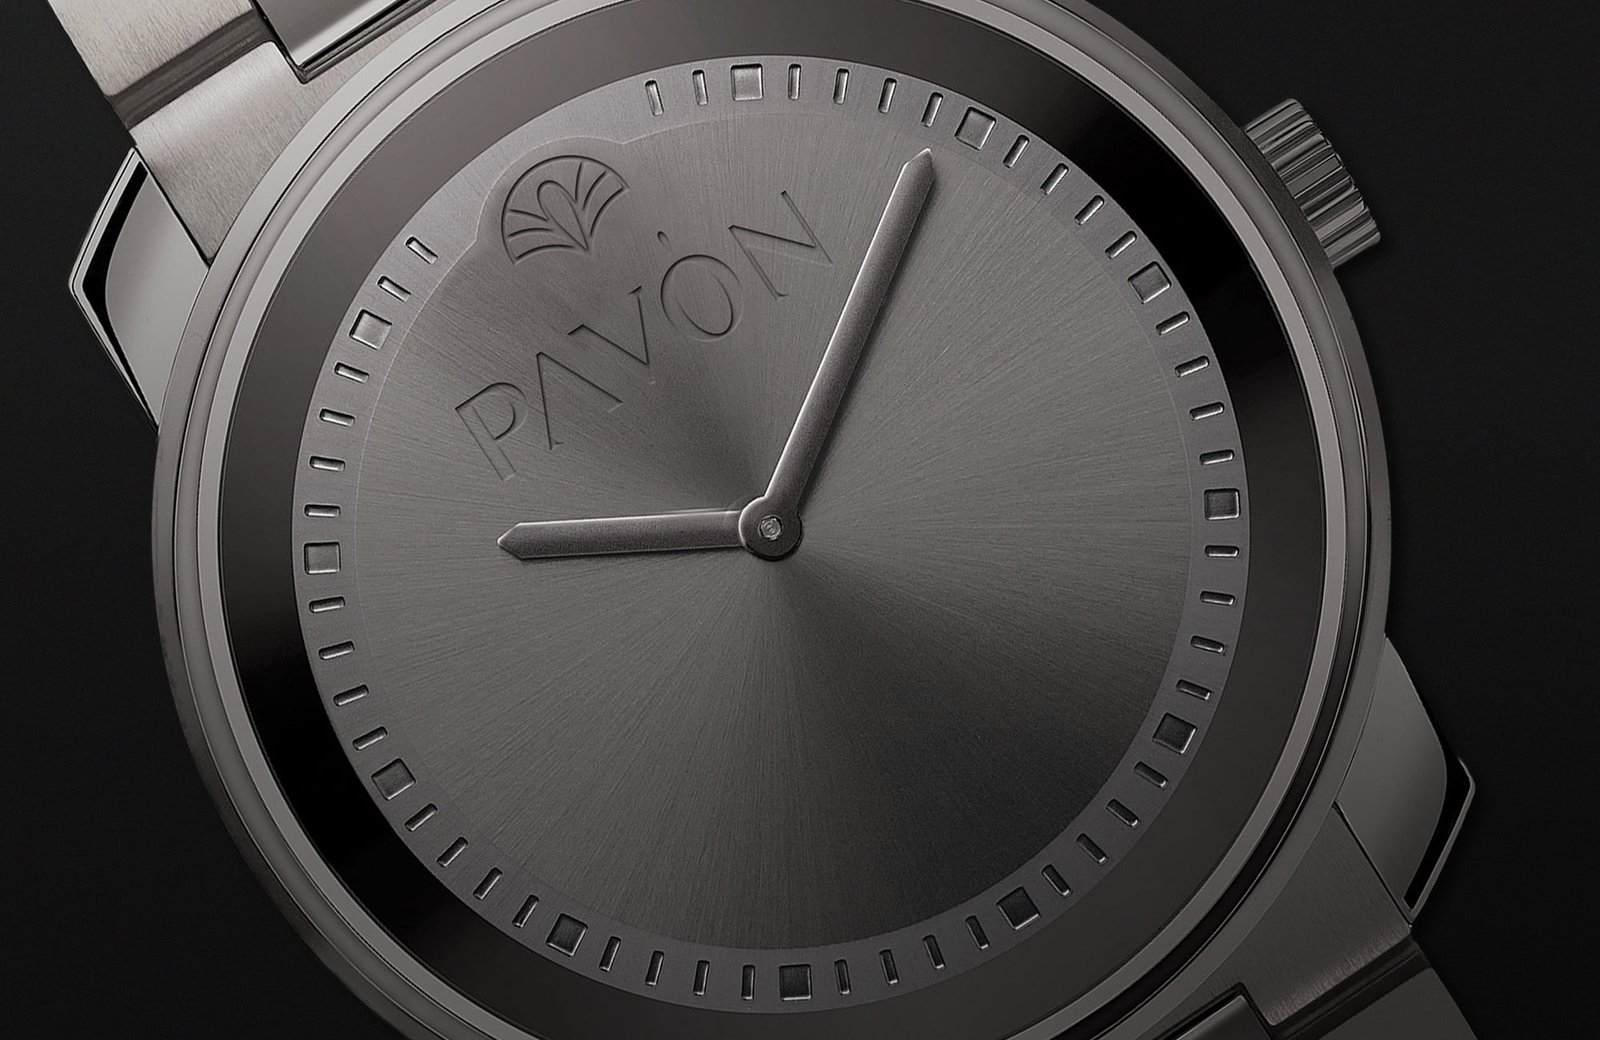 Pavon Watches product design